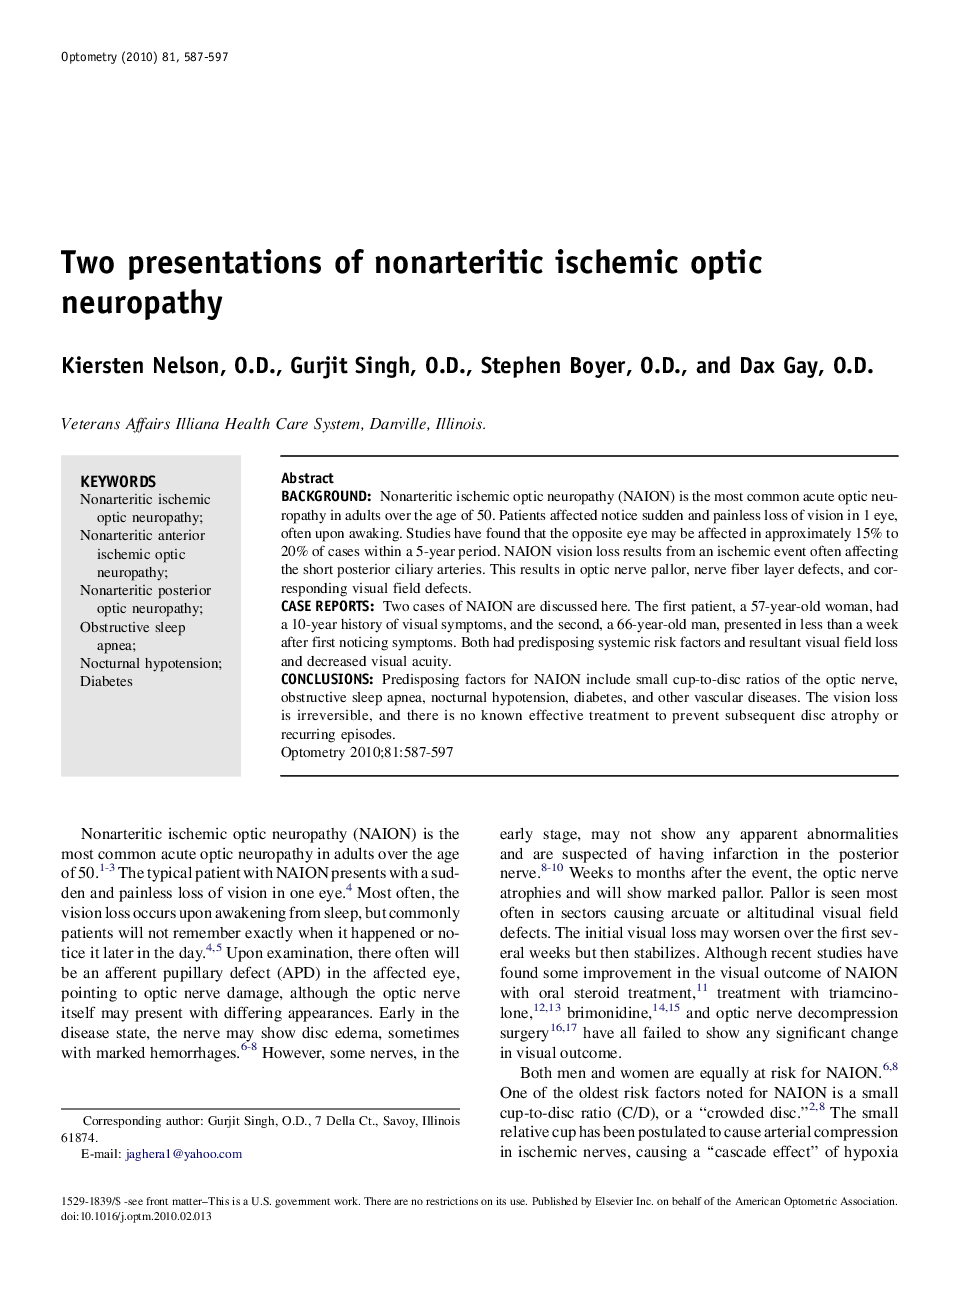 Two presentations of nonarteritic ischemic optic neuropathy